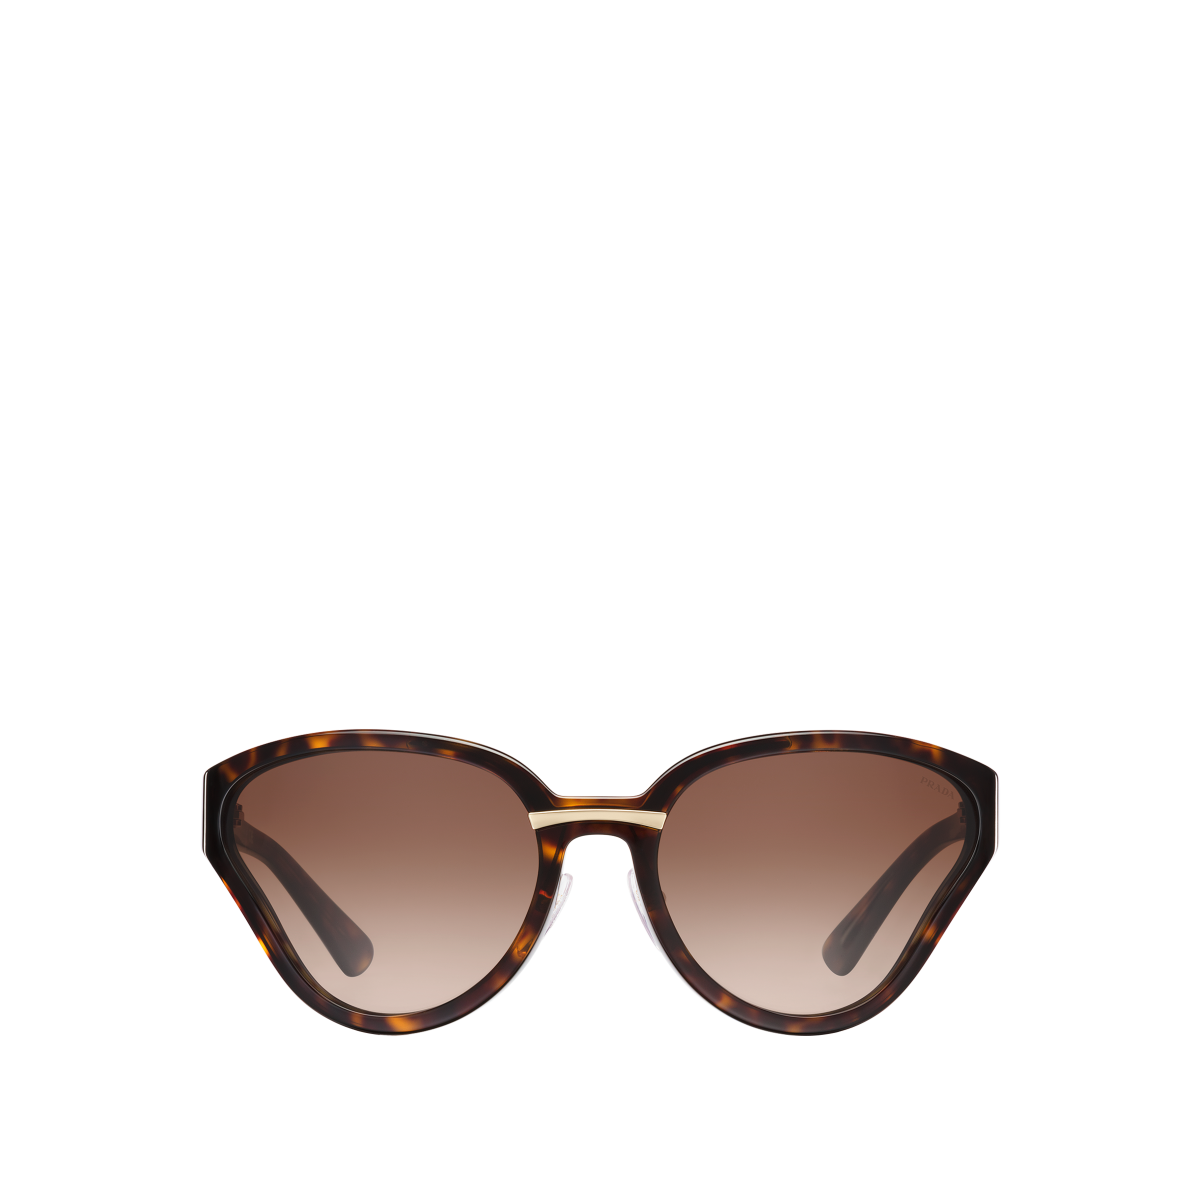 Top 5 Prada Sunglasses To Consider Buying | TouristSecrets